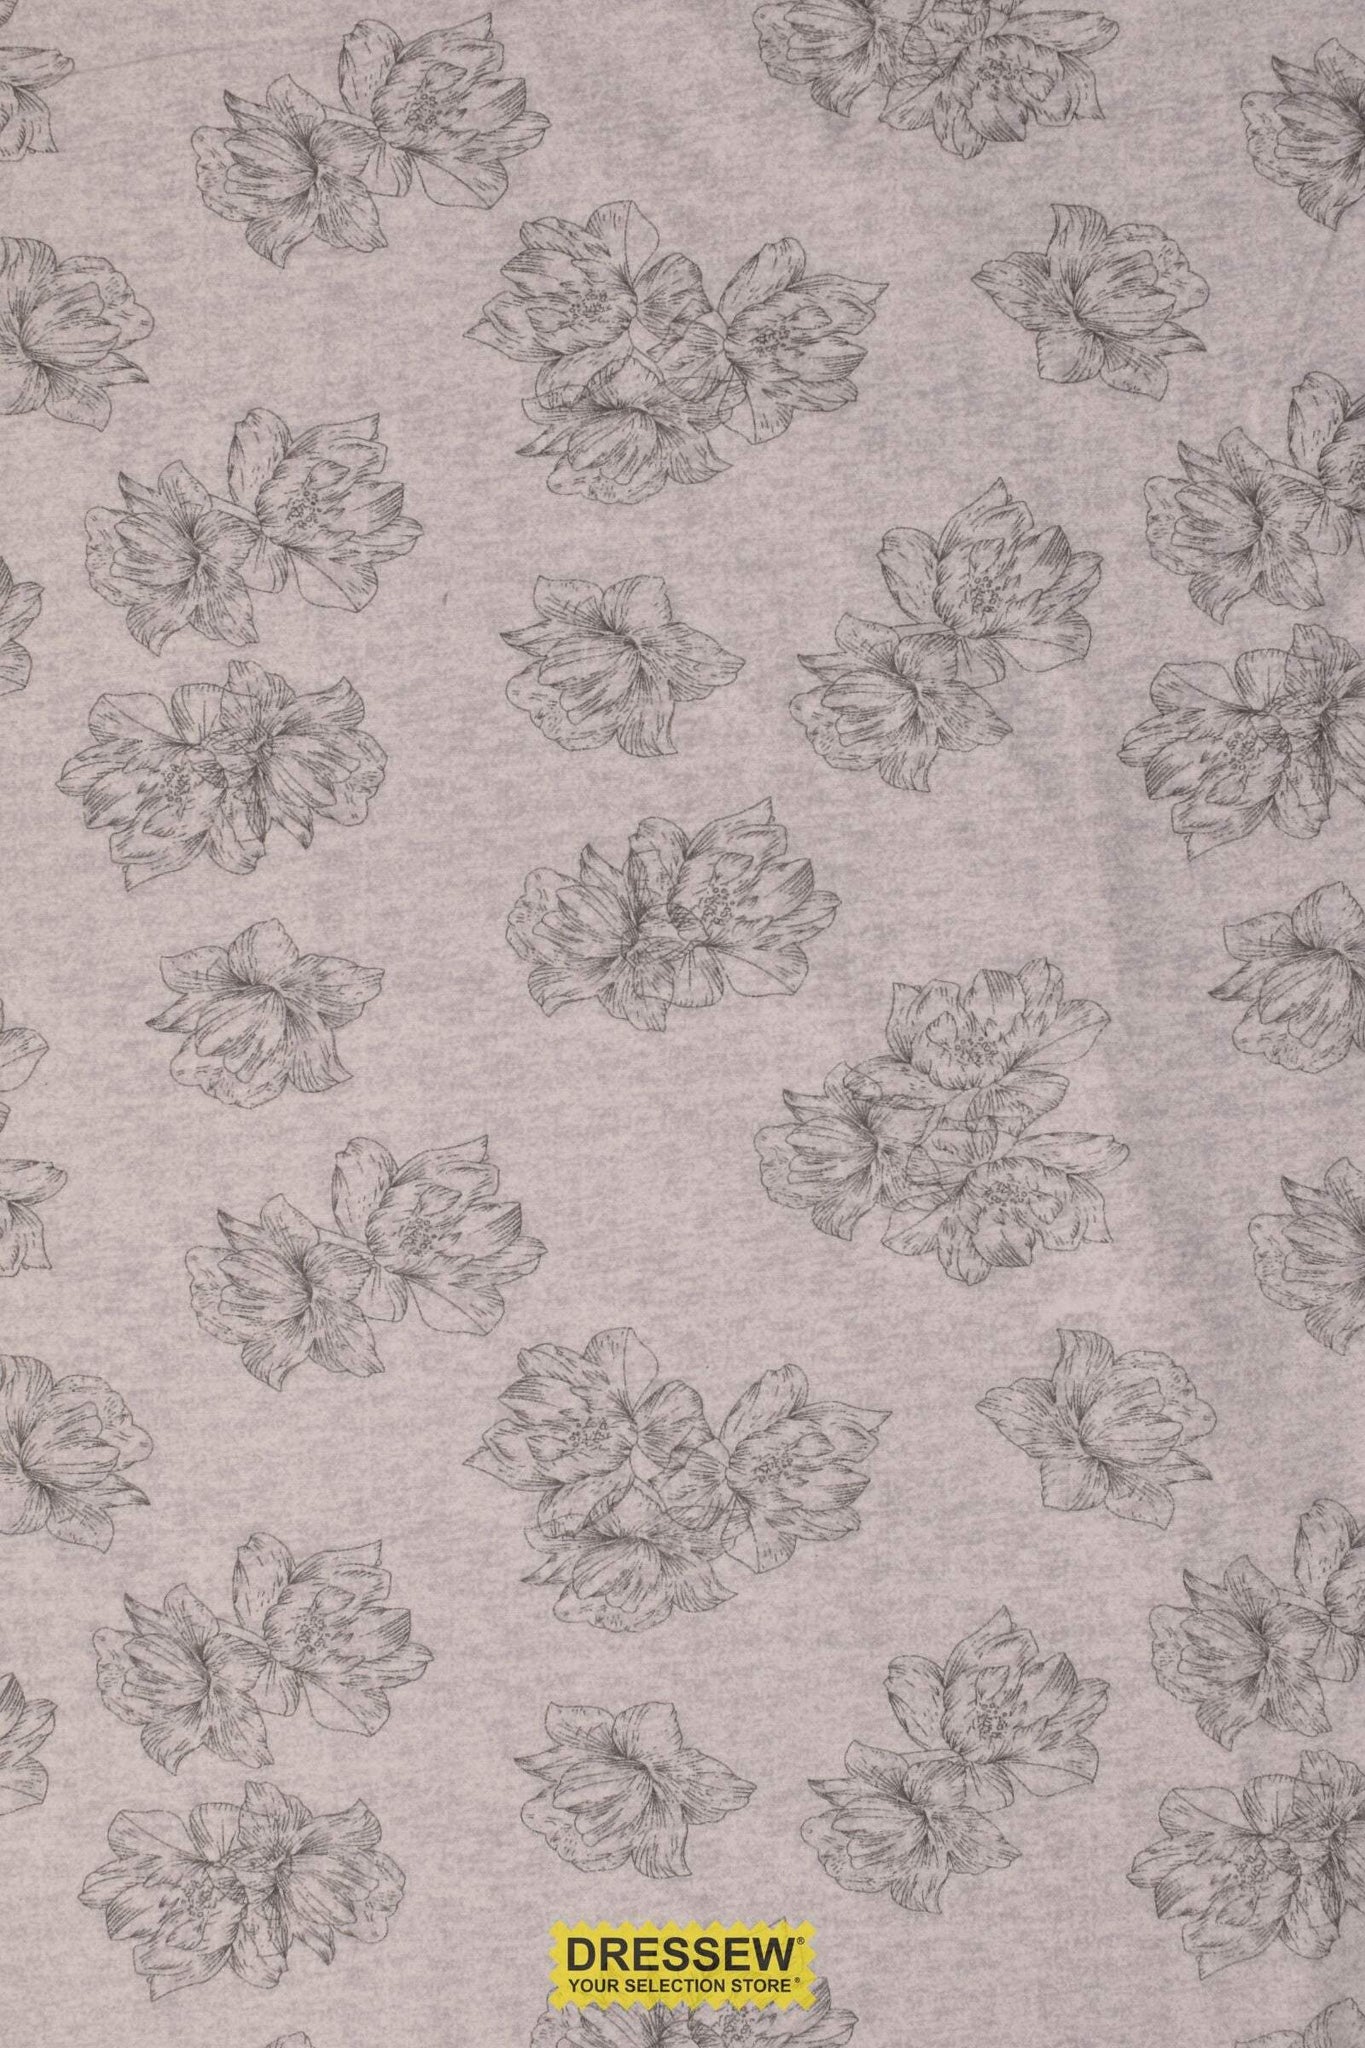 Blossom Flannelette Fog / Grey